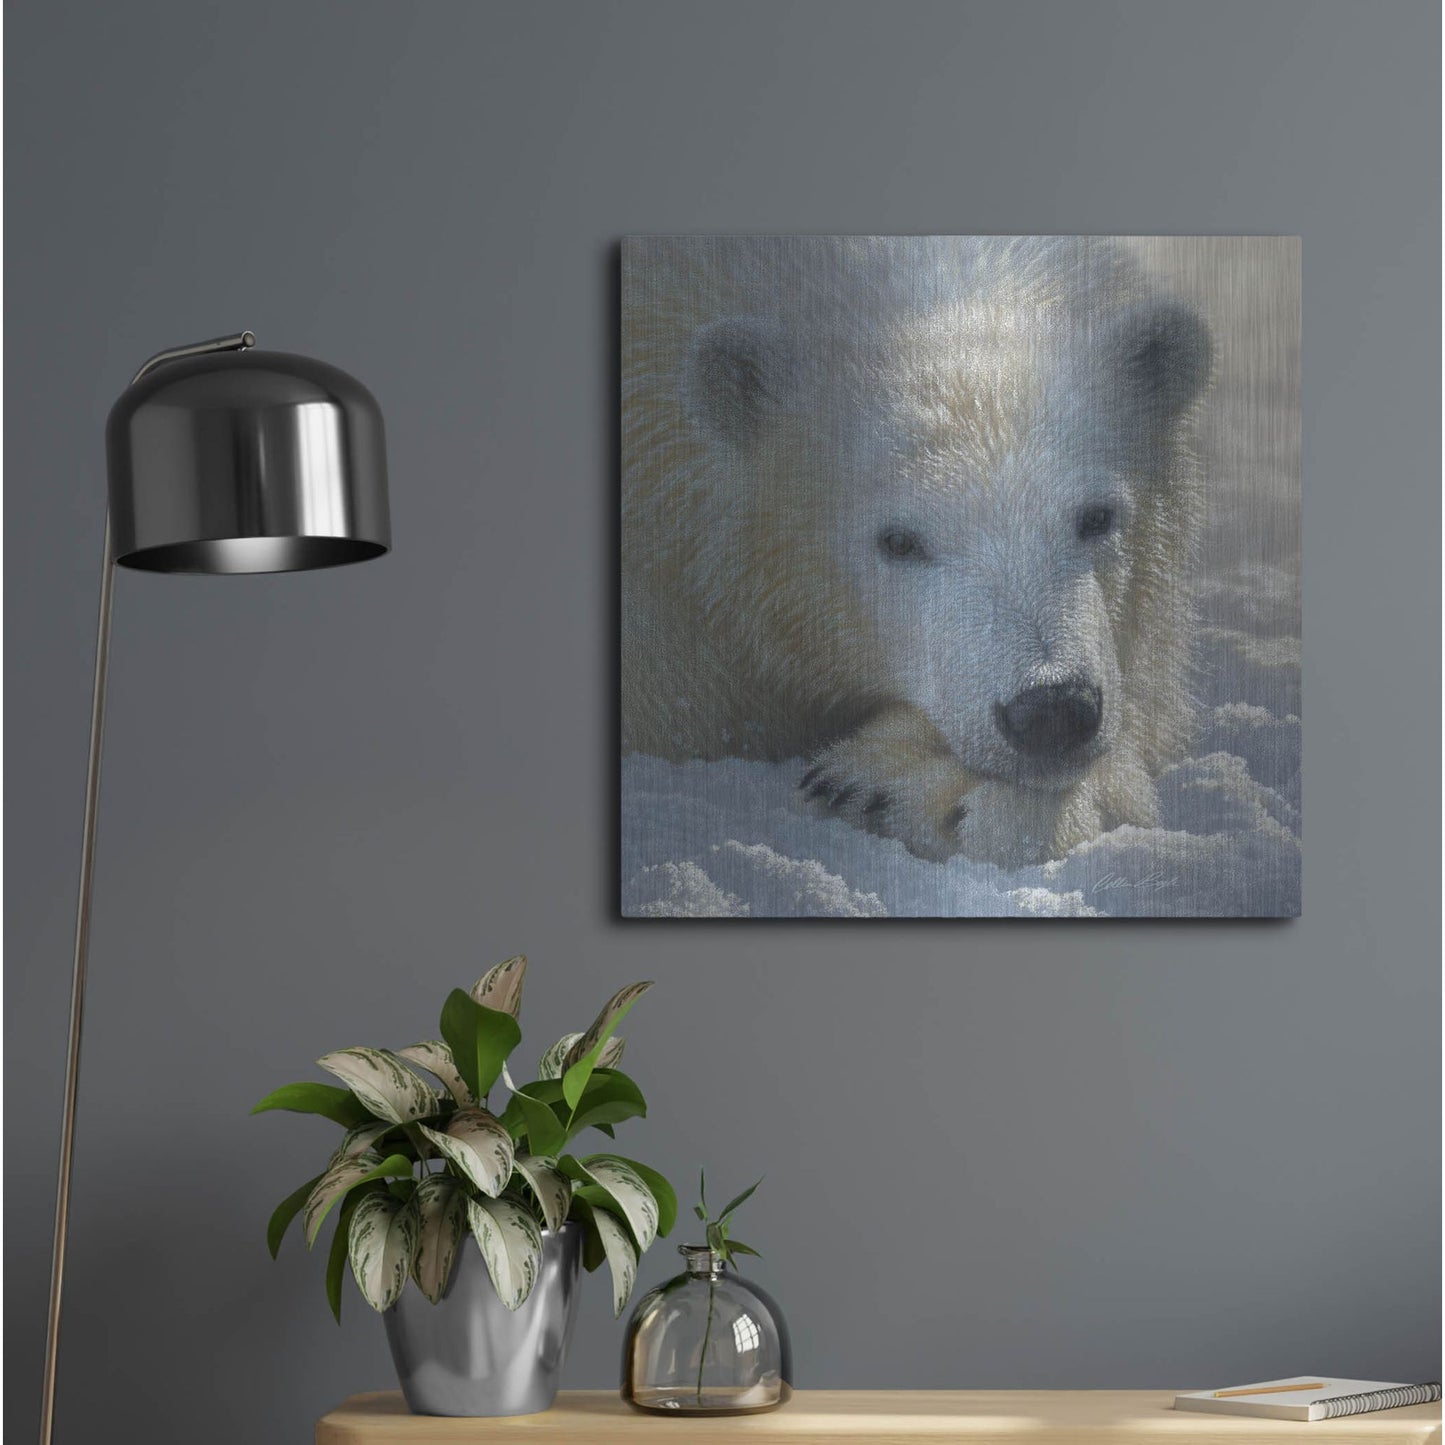 Luxe Metal Art 'Polar Bear Cub' by Collin Bogle, Metal Wall Art,24x24